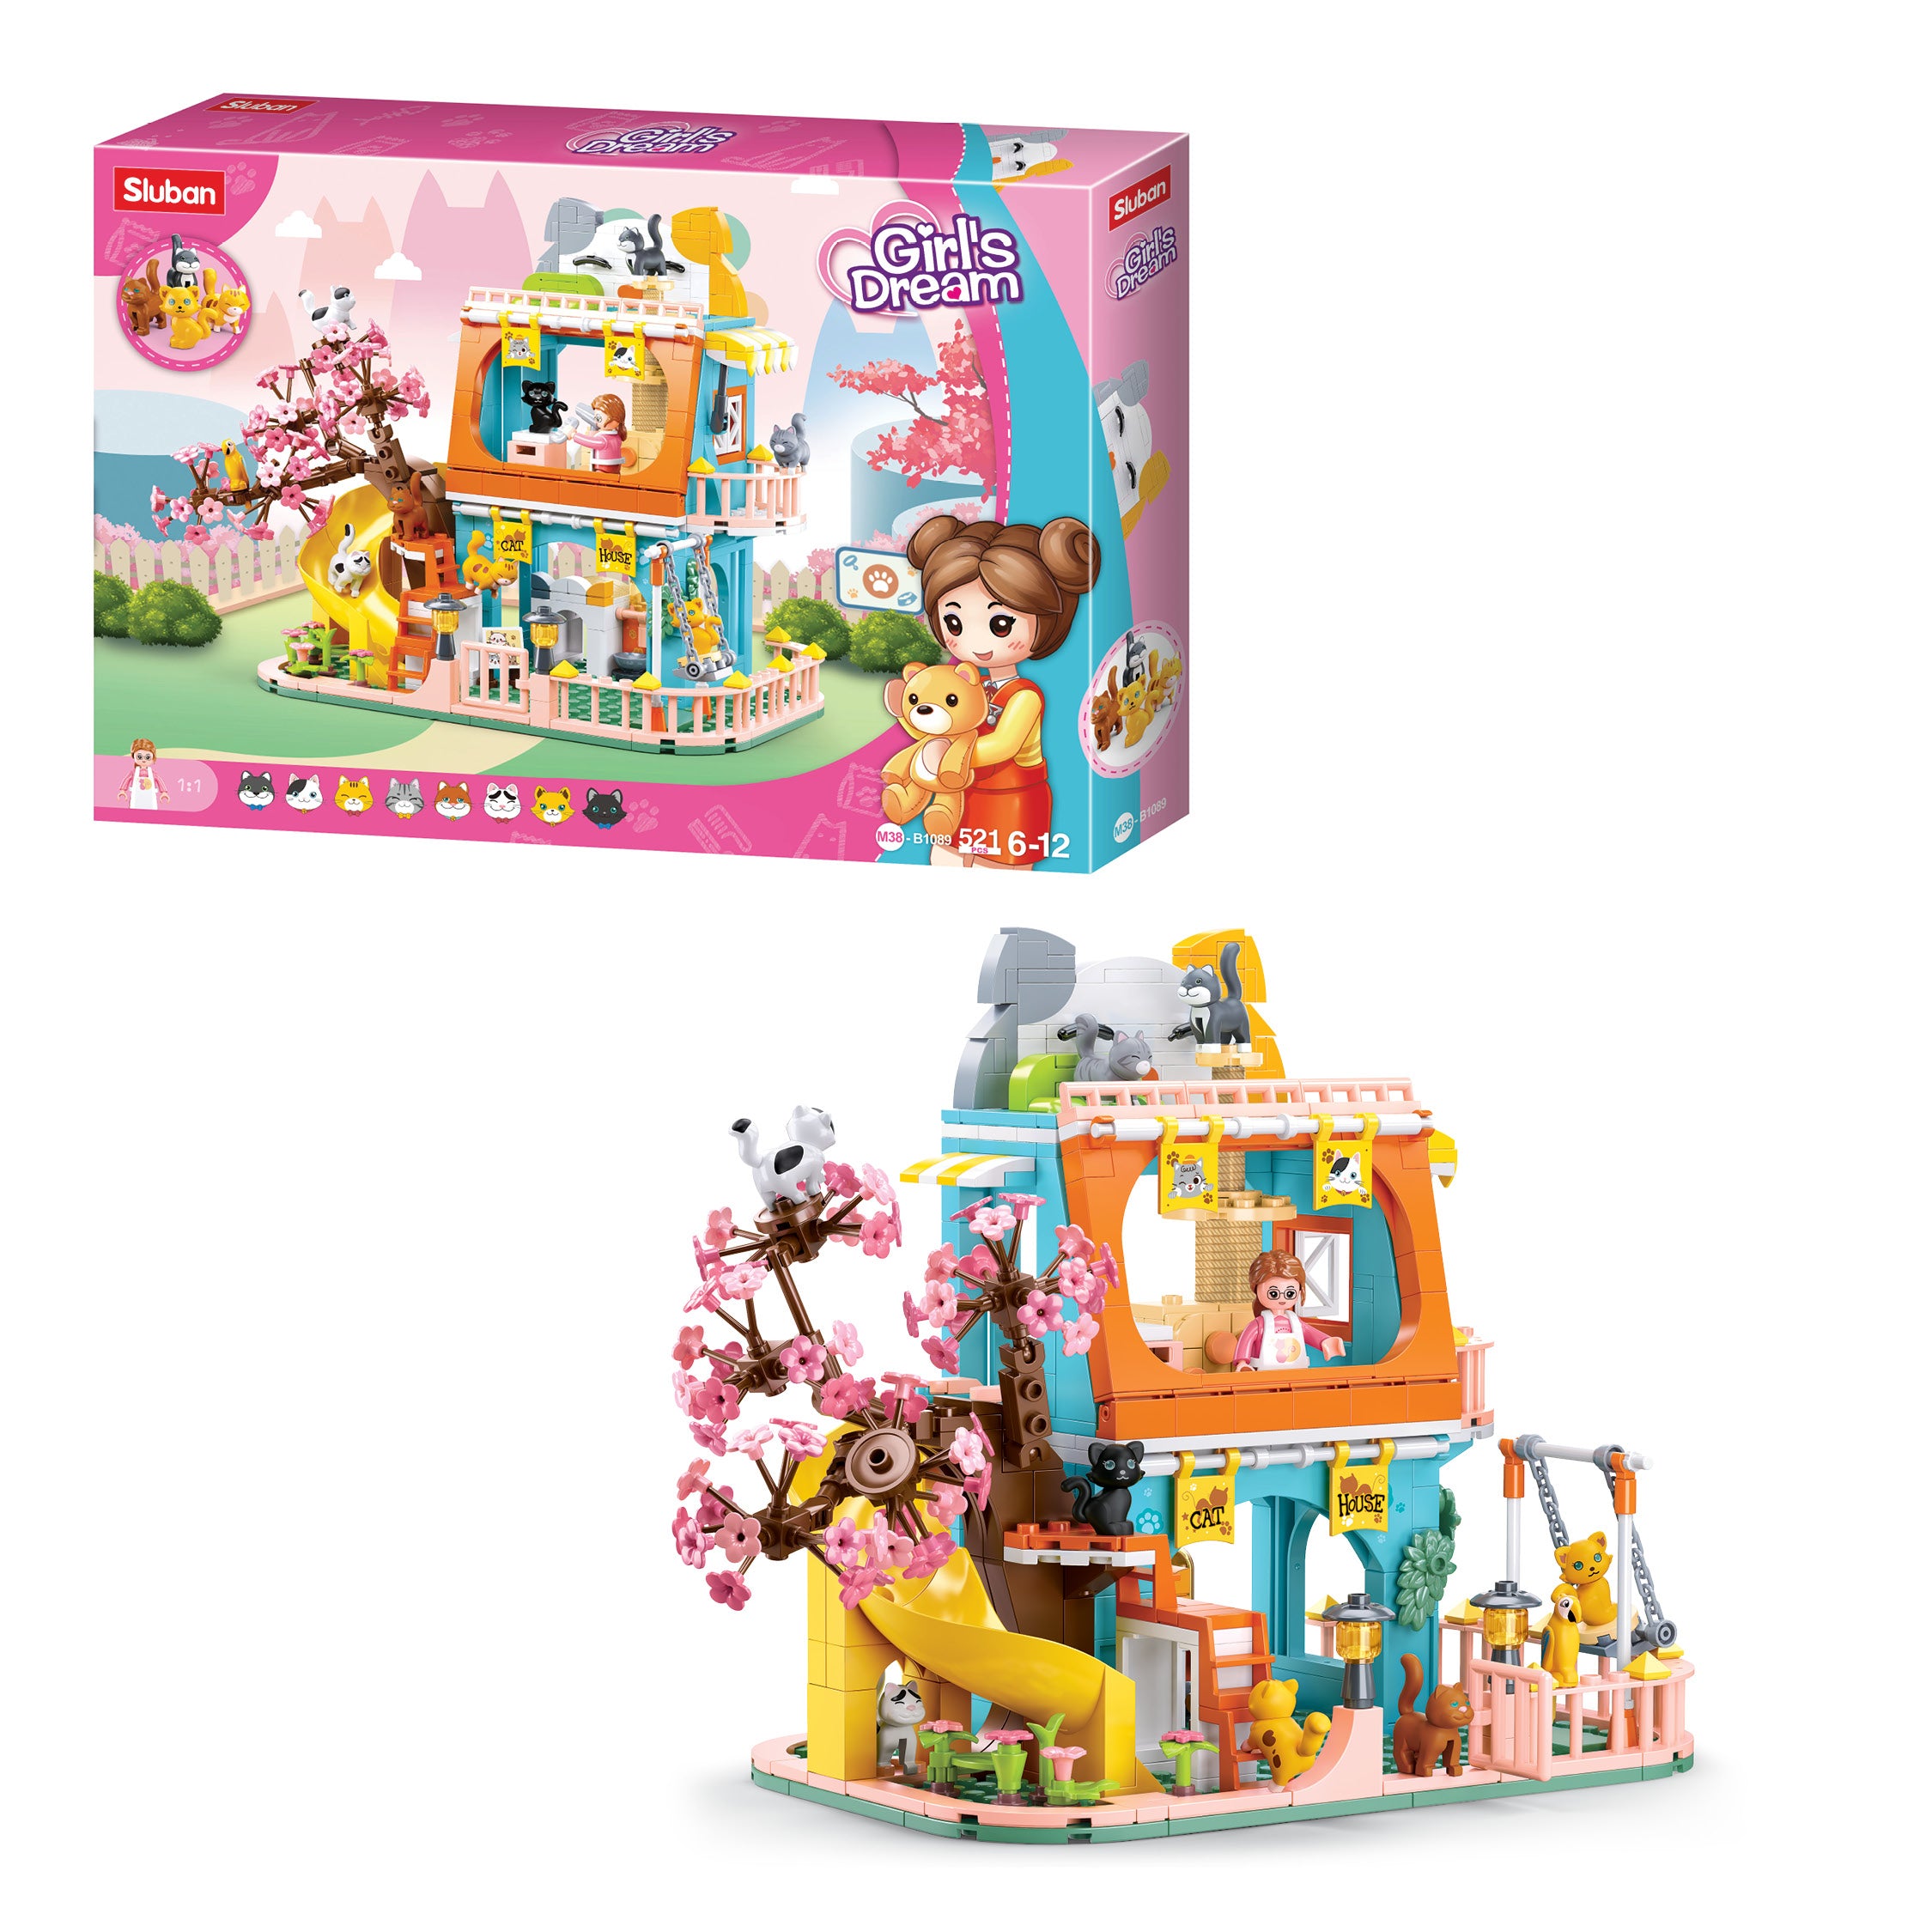 SLUBAN® Girls Dream-Cat House 521 pcs (M38-B1089) Building Blocks Kit For Girls Aged 6 Years And Above Creative Construction  Set Educational STEM Toy